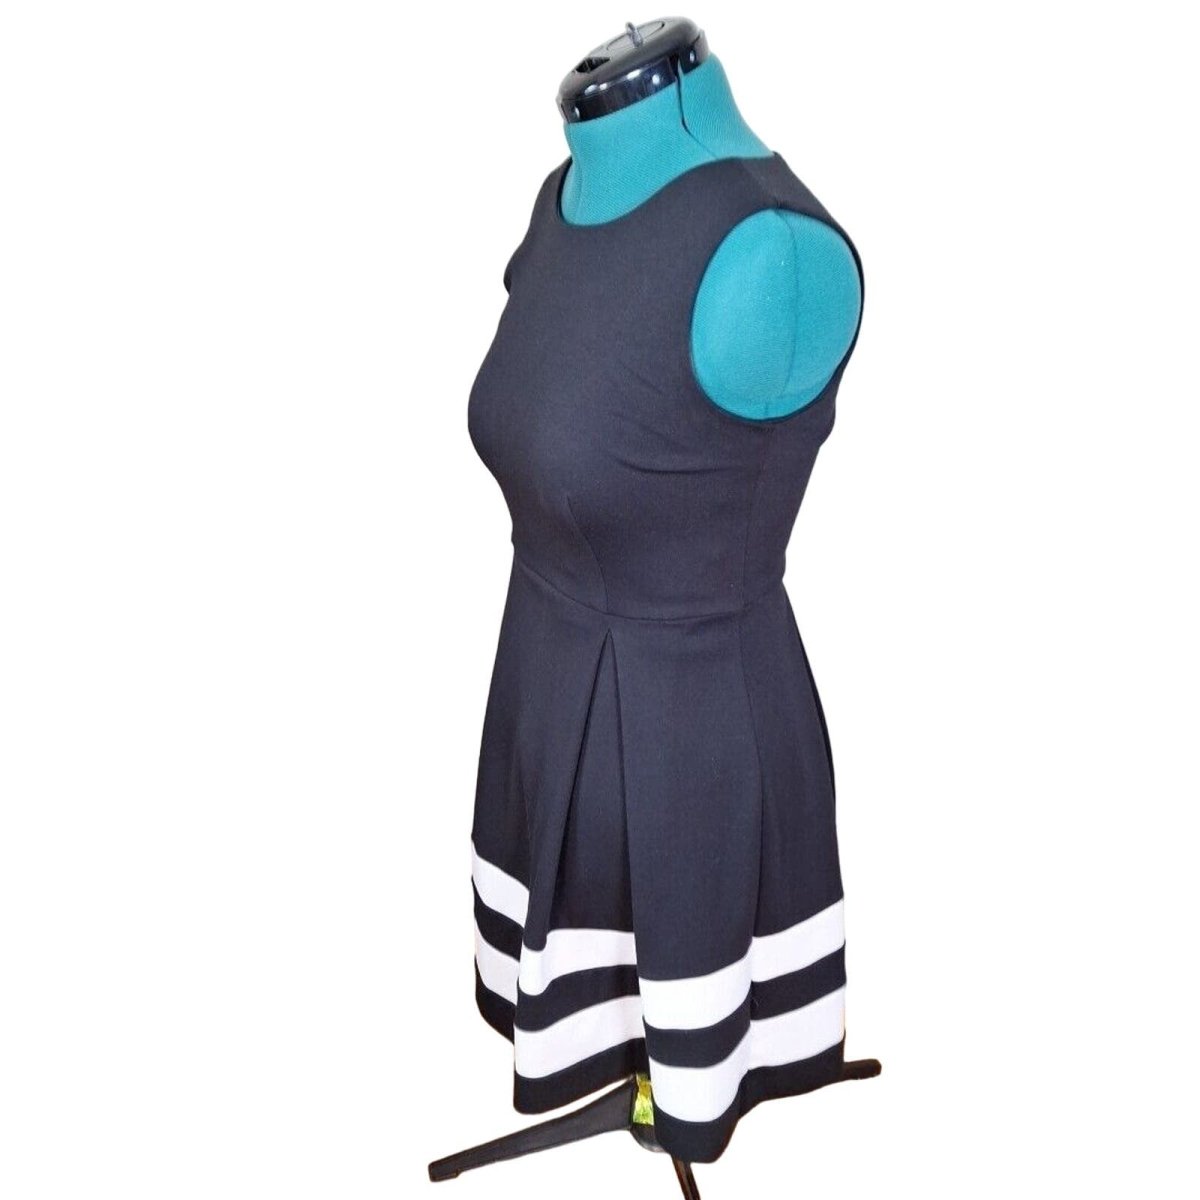 Y2K/Modern Black/White Border Stripe Nautical Dress Women Size 6 S/M - themallvintage The Mall Vintage